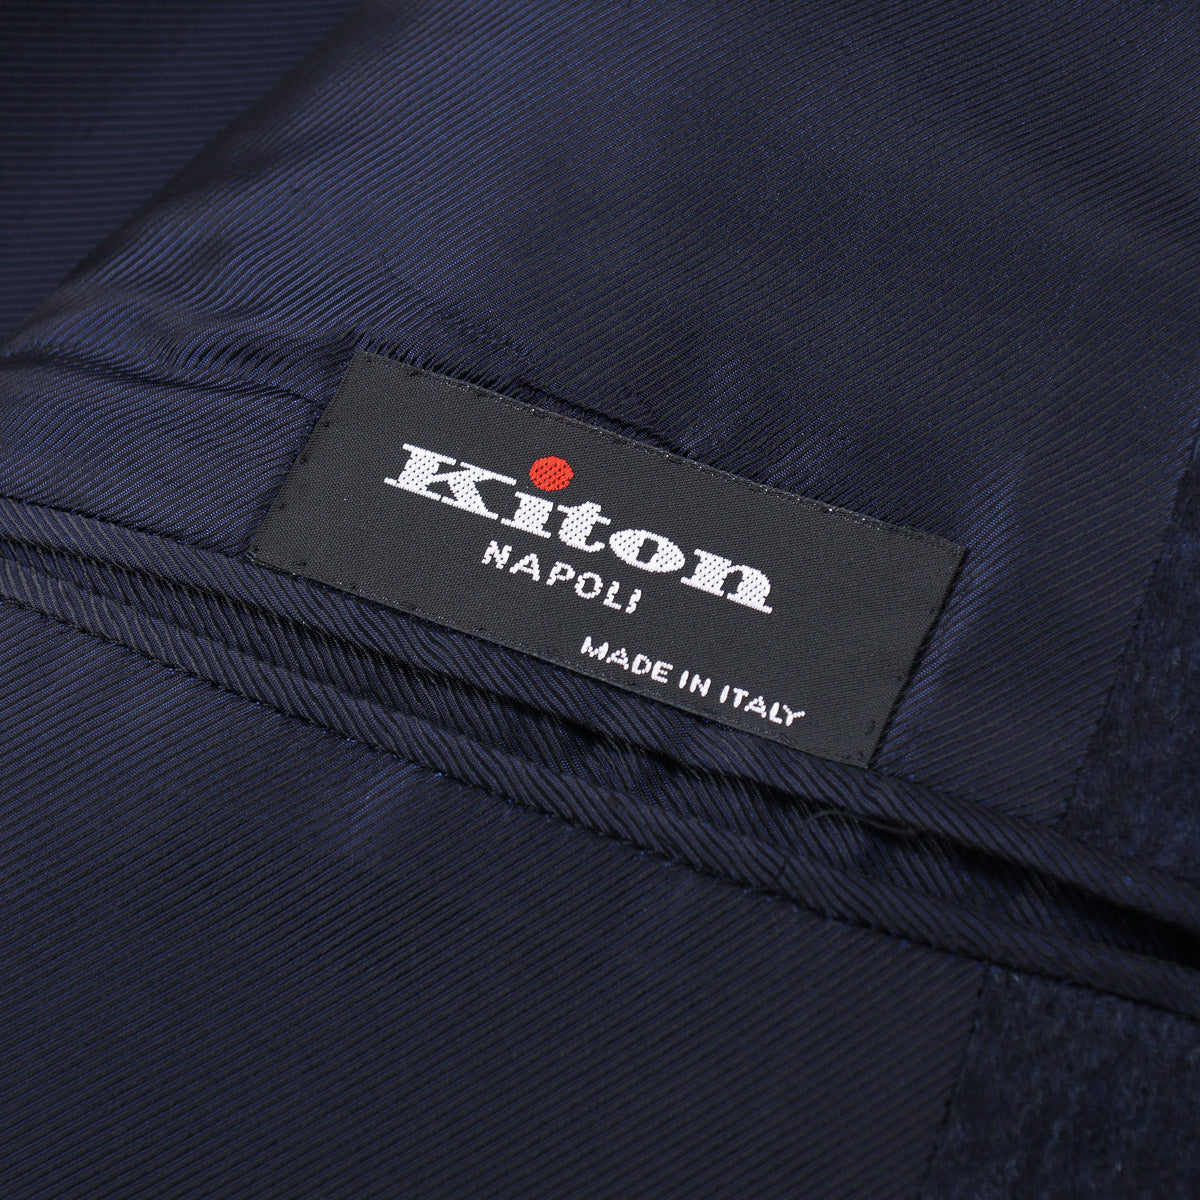 Kiton Blue Check Cashmere Overcoat - Top Shelf Apparel